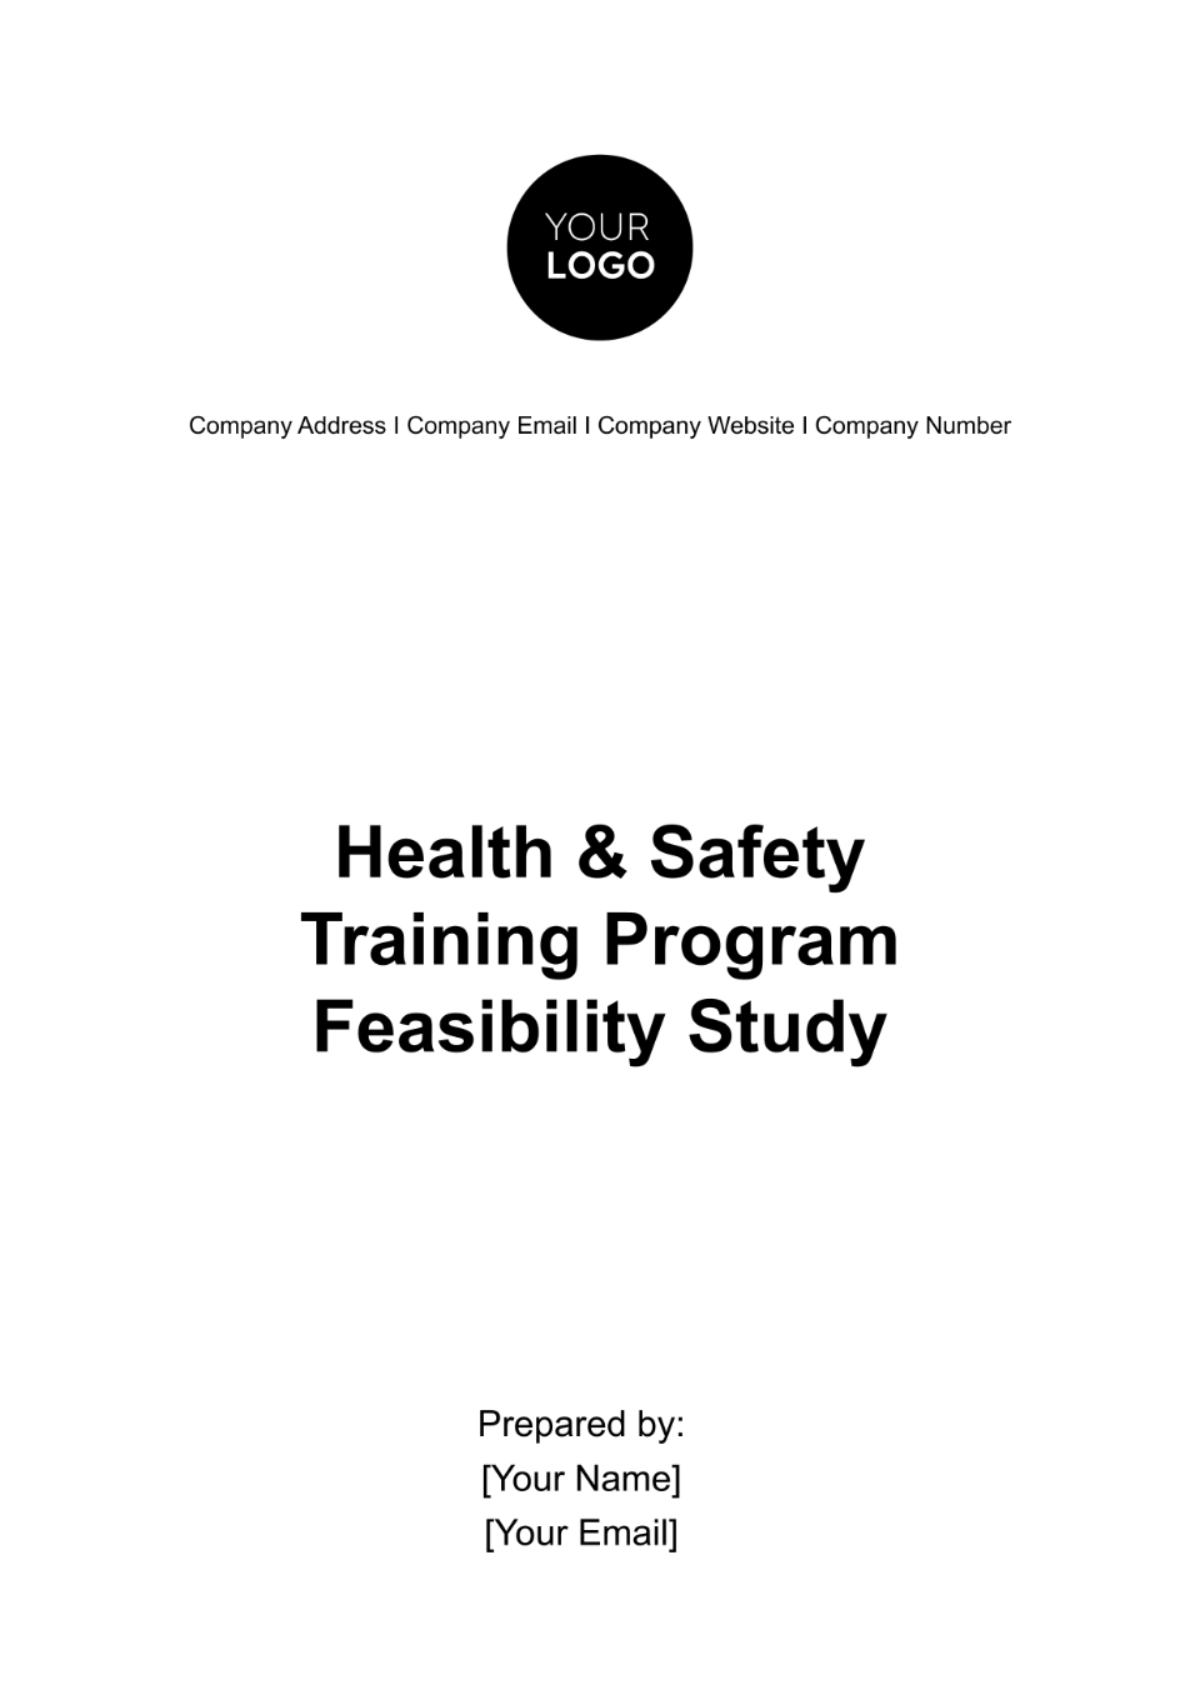 Health & Safety Training Program Feasibility Study Template